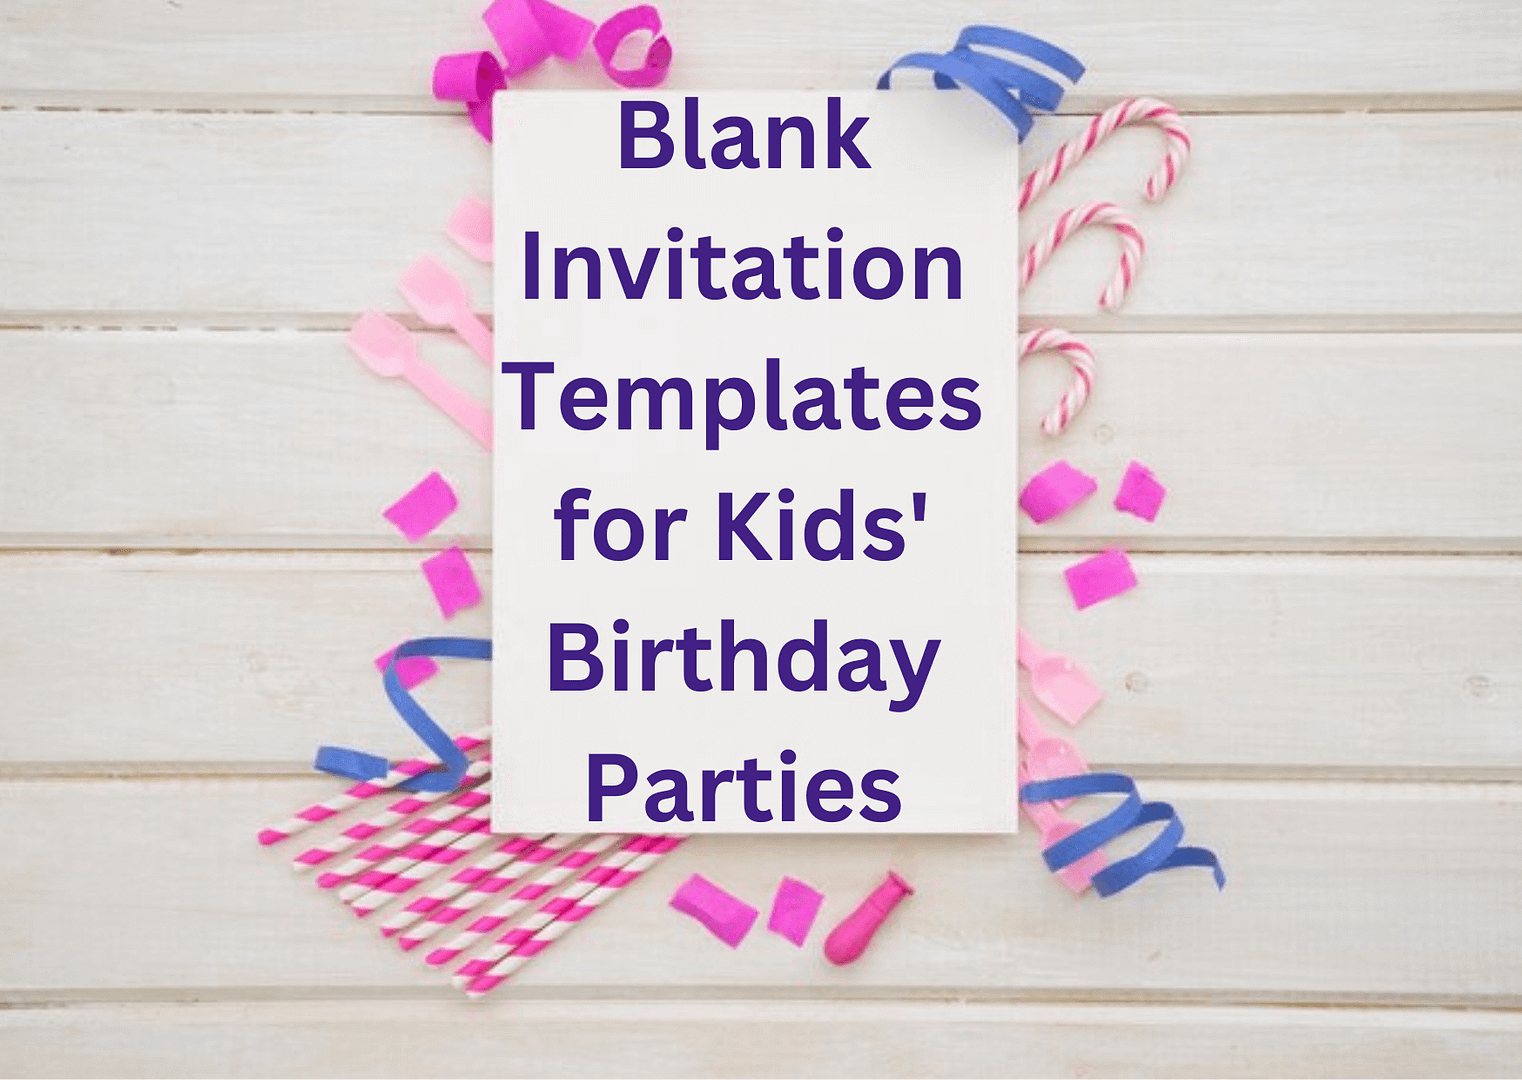 blank invitation for birthday parties